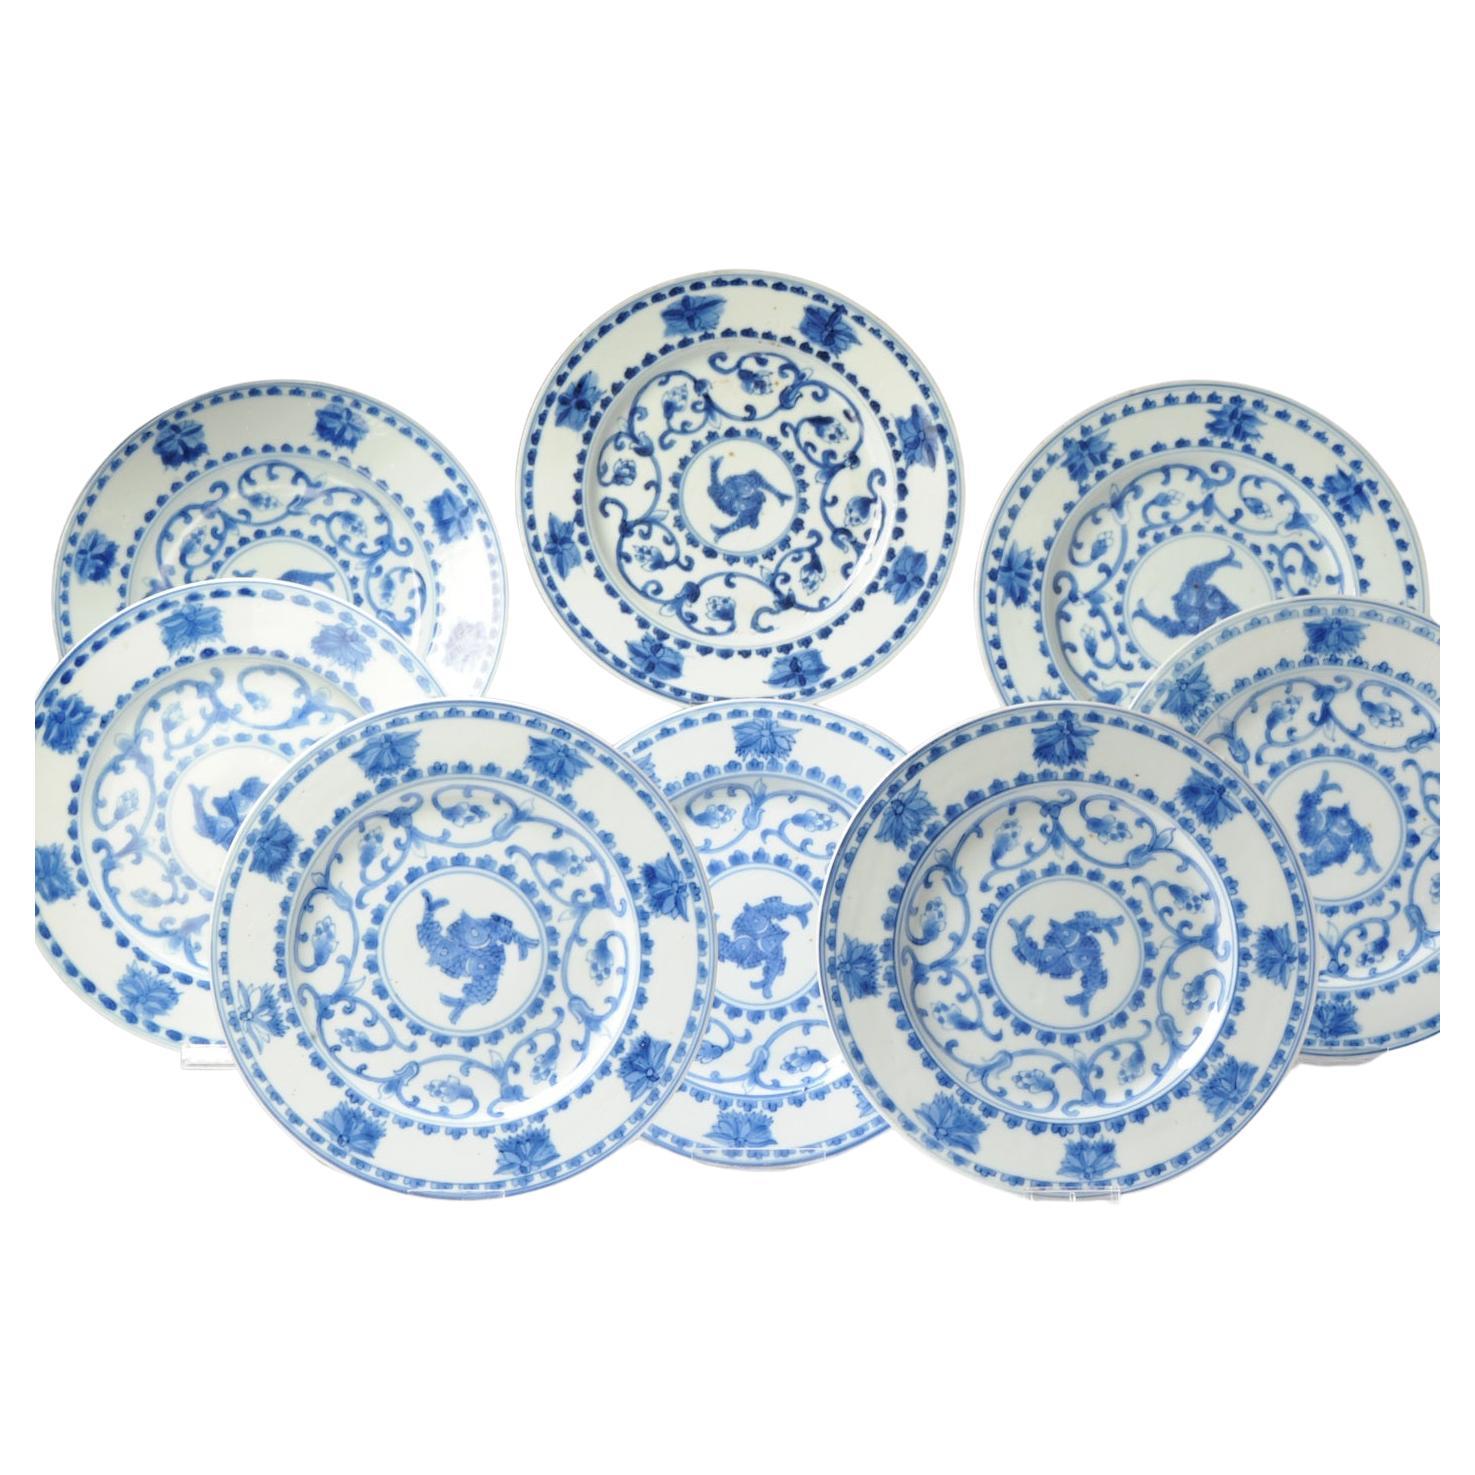 #8 Antique Chinese Porcelain 18th C Kangxi/Yongzheng Period Blue White